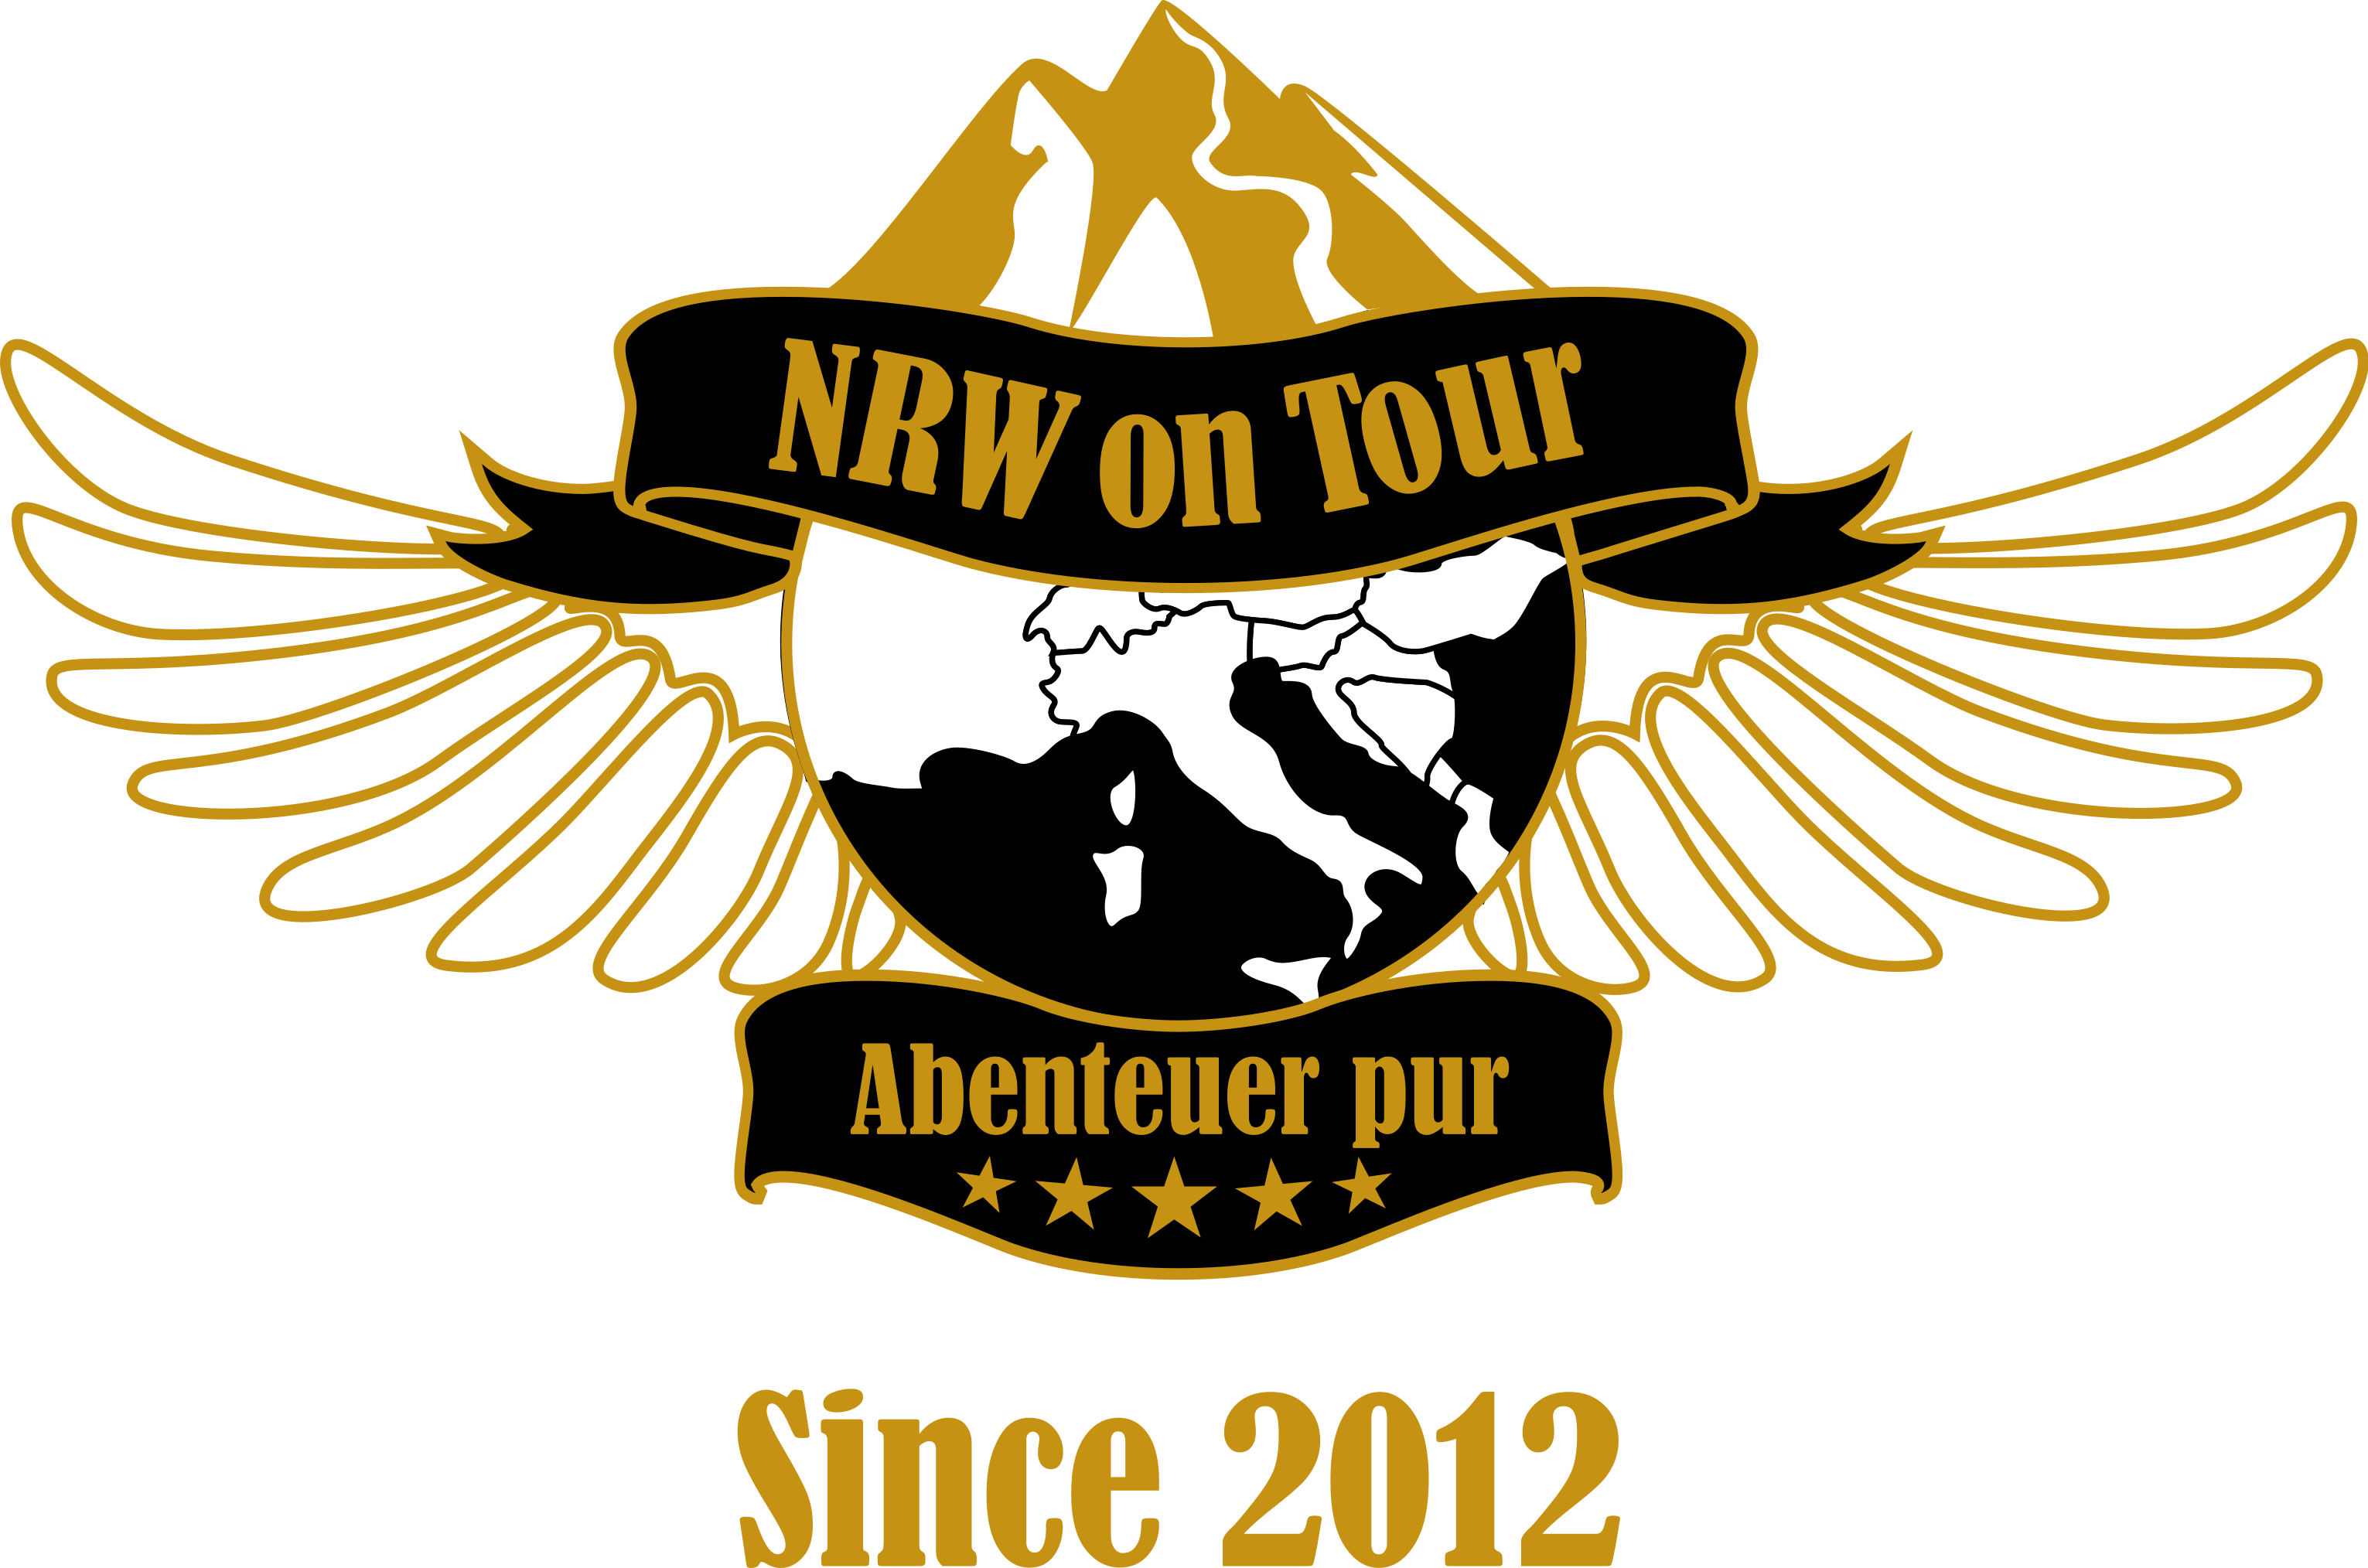 Motorradtouren NRW on Tour